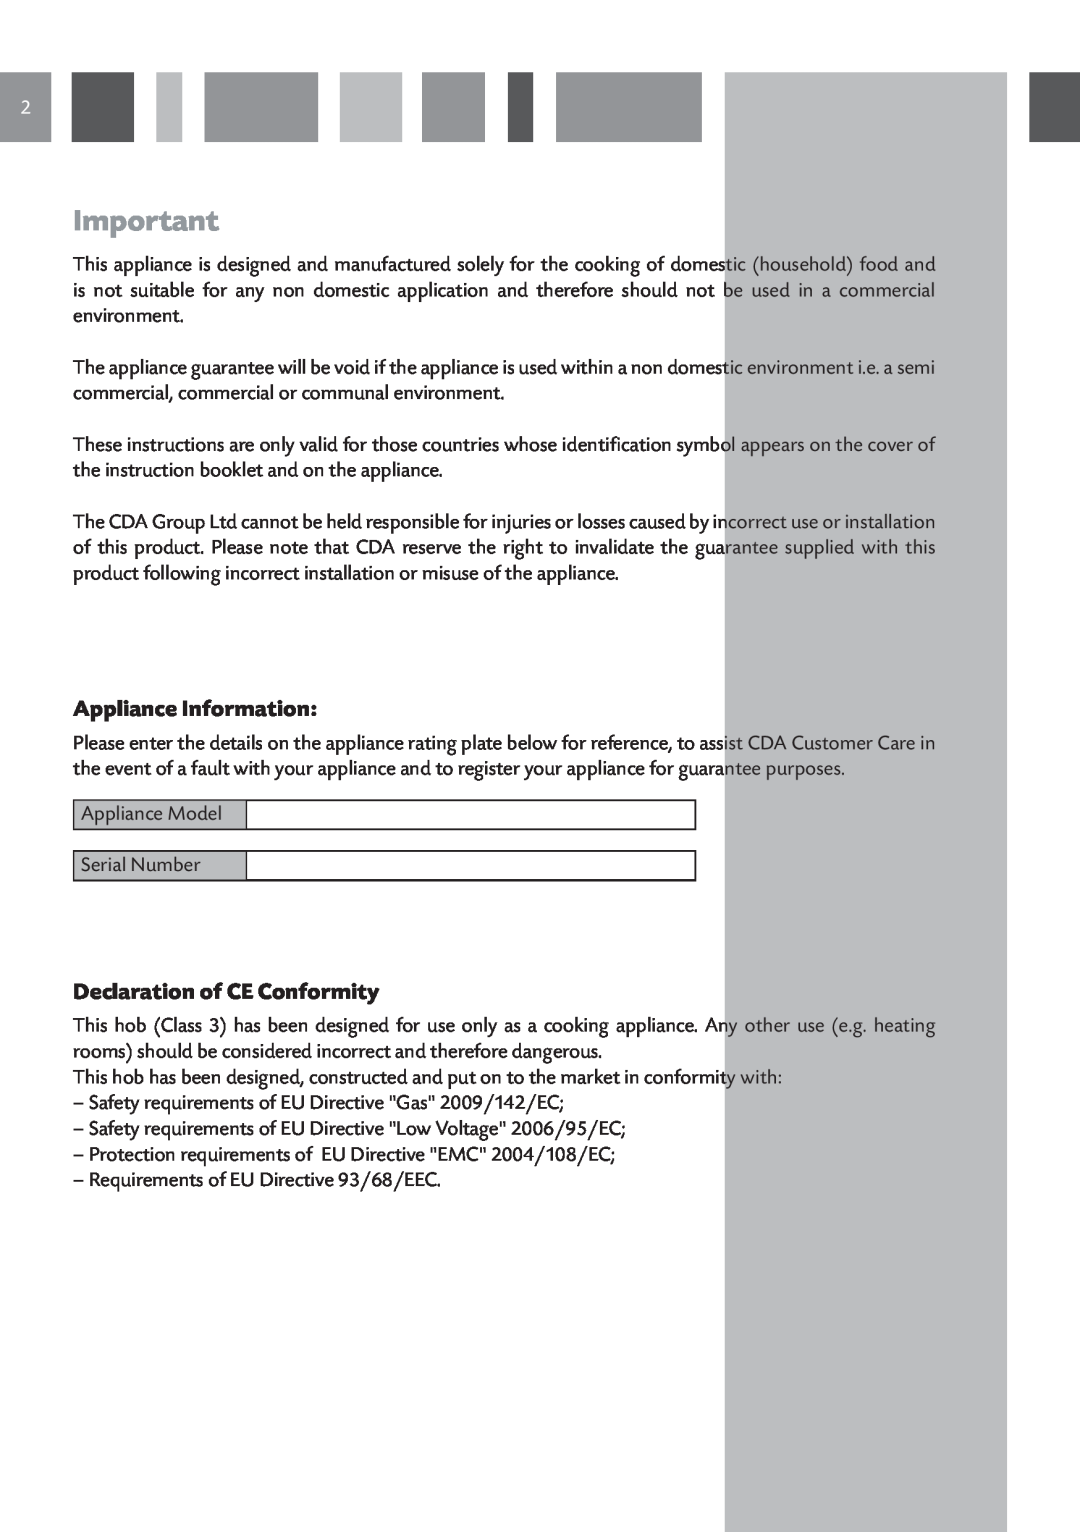 CDA HCG 731, HCG 741 manual Appliance Information, Declaration of CE Conformity 